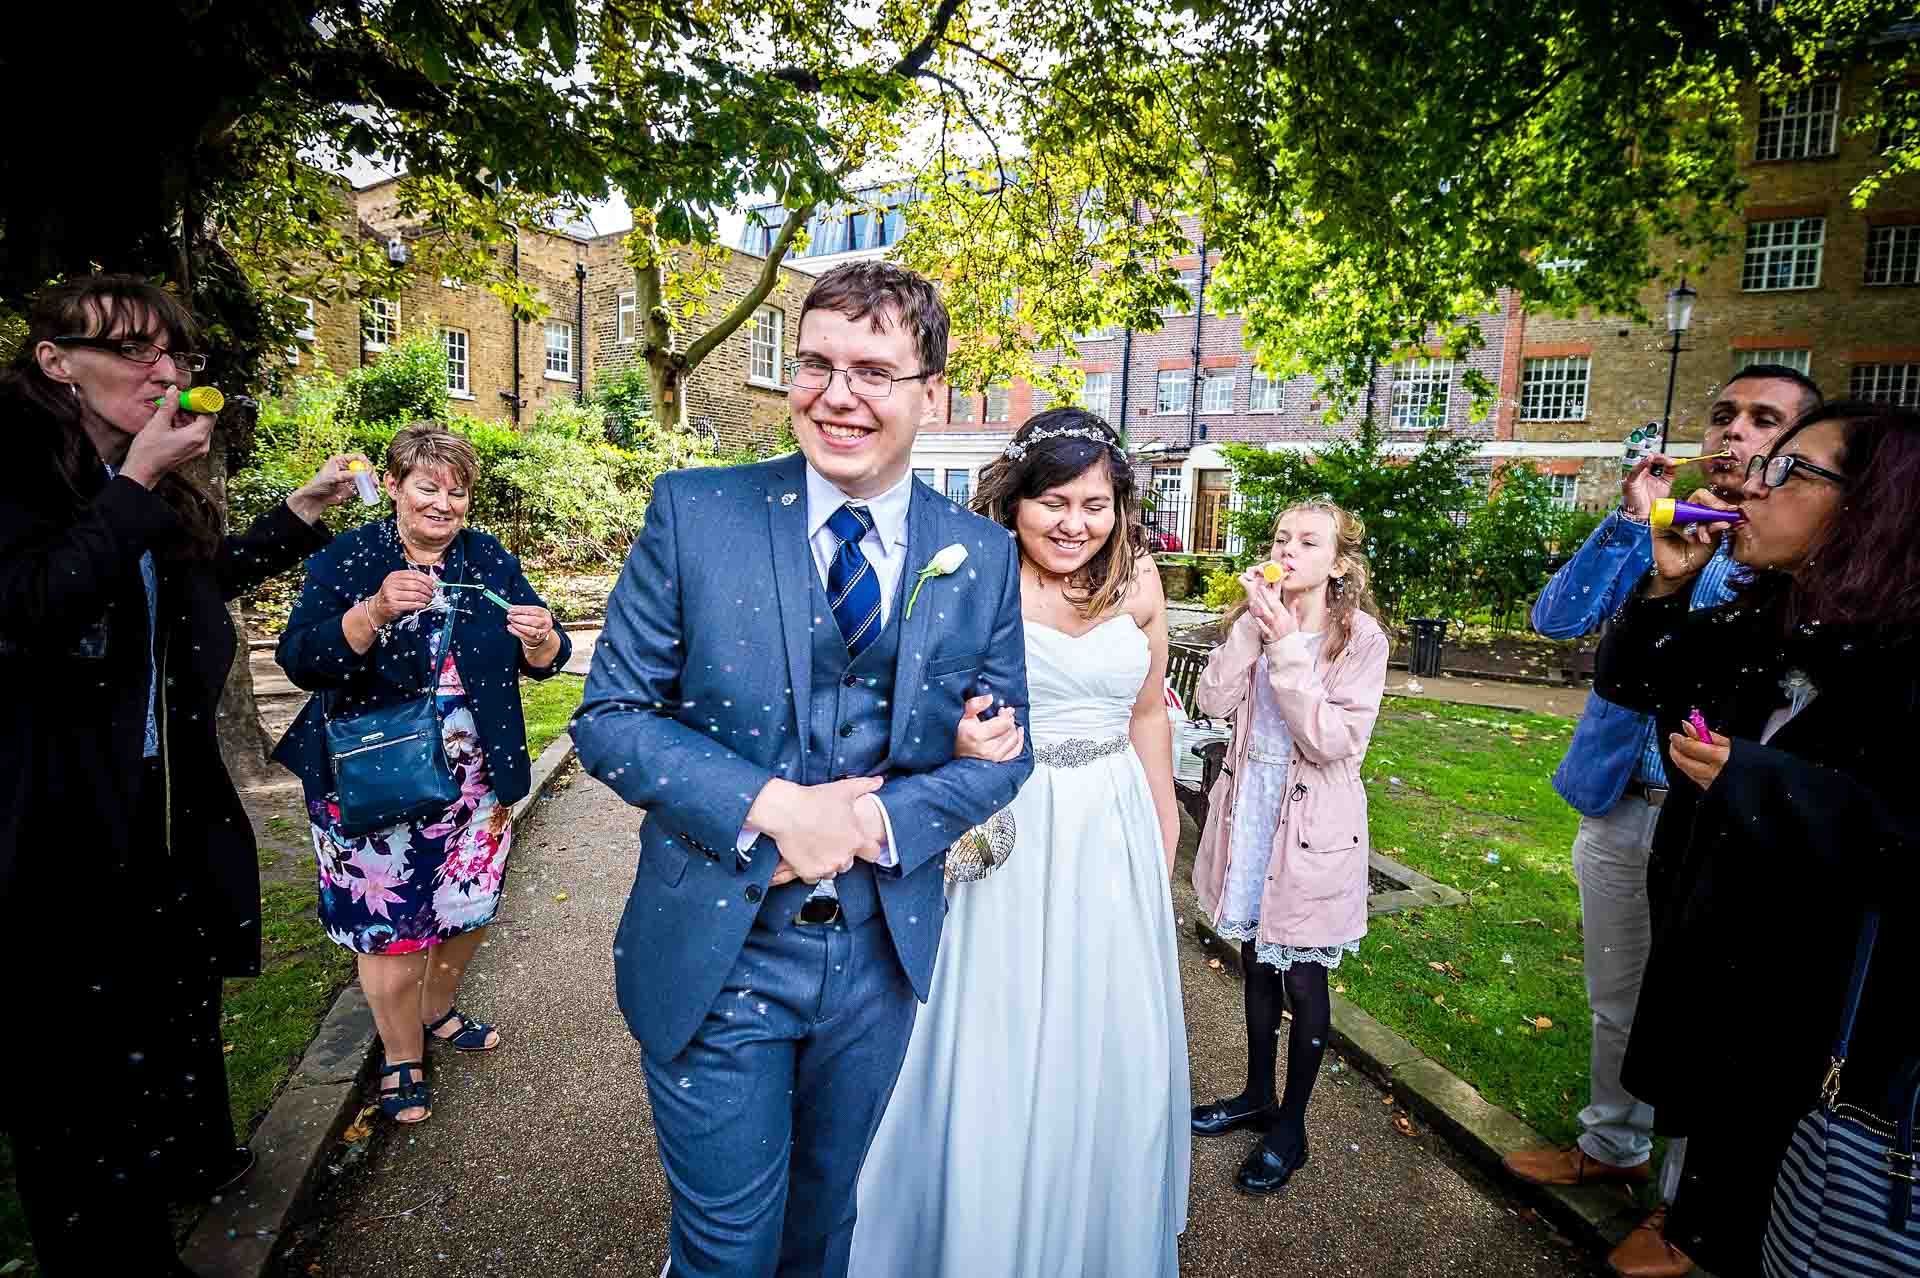 Bubbles Confetti at Wedding in Park in London